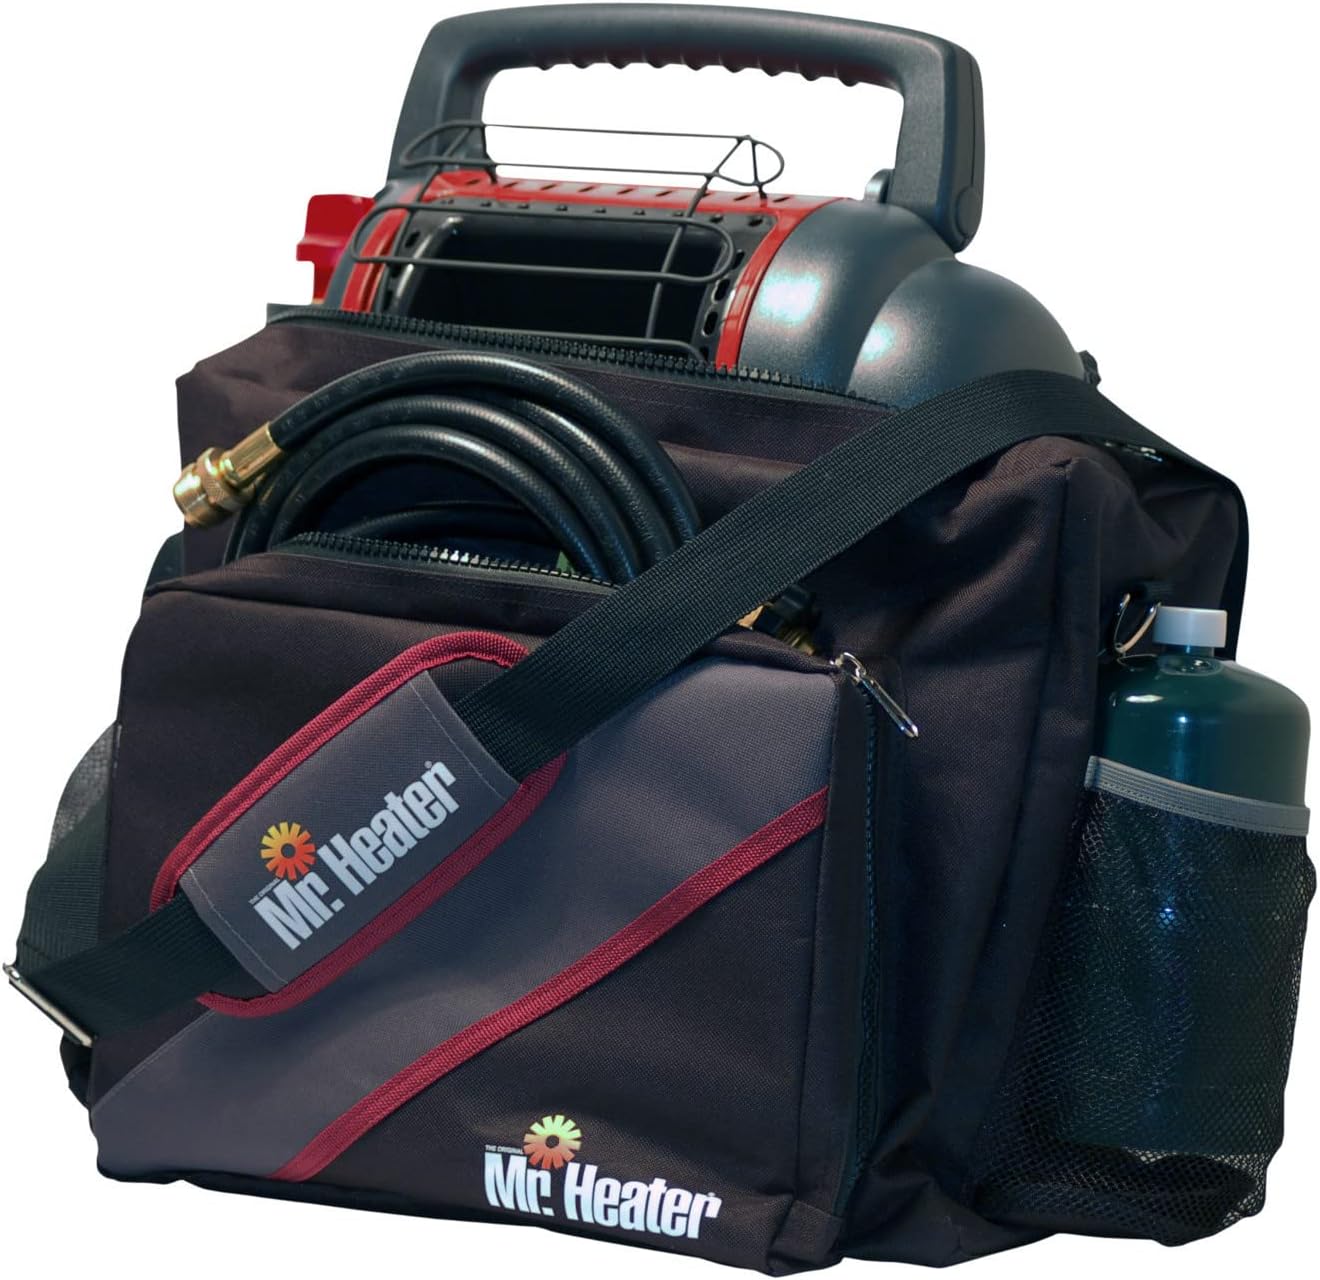 Mr. Heater Portable Buddy Carry Bag 9BX, Black - Mr. Heater Buddy Carry Bag Review